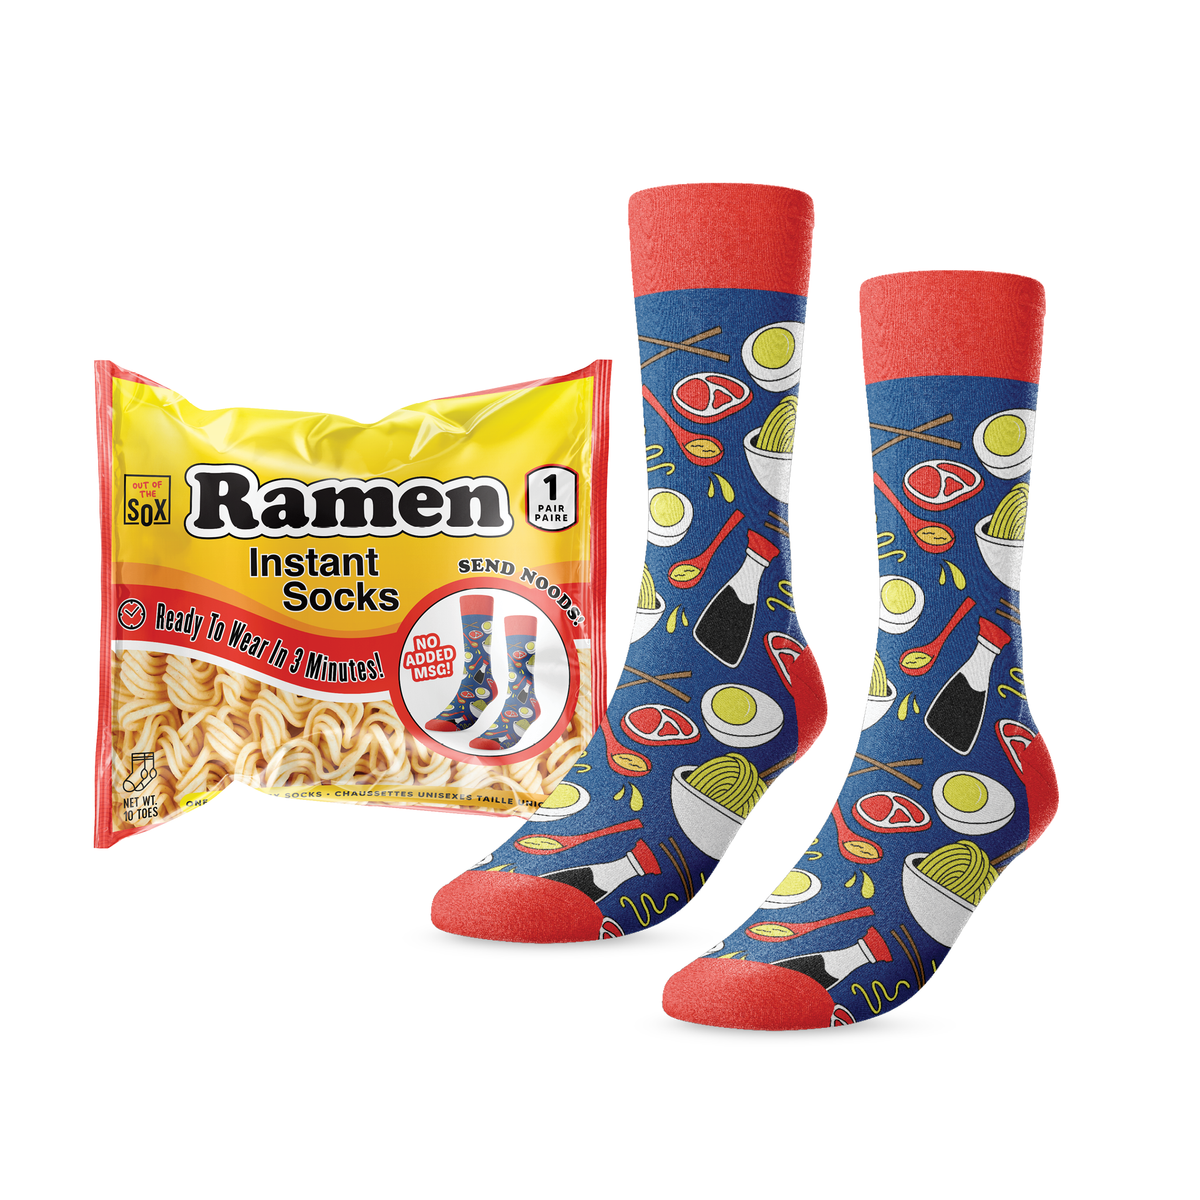 Instant Ramen Noodle Socks